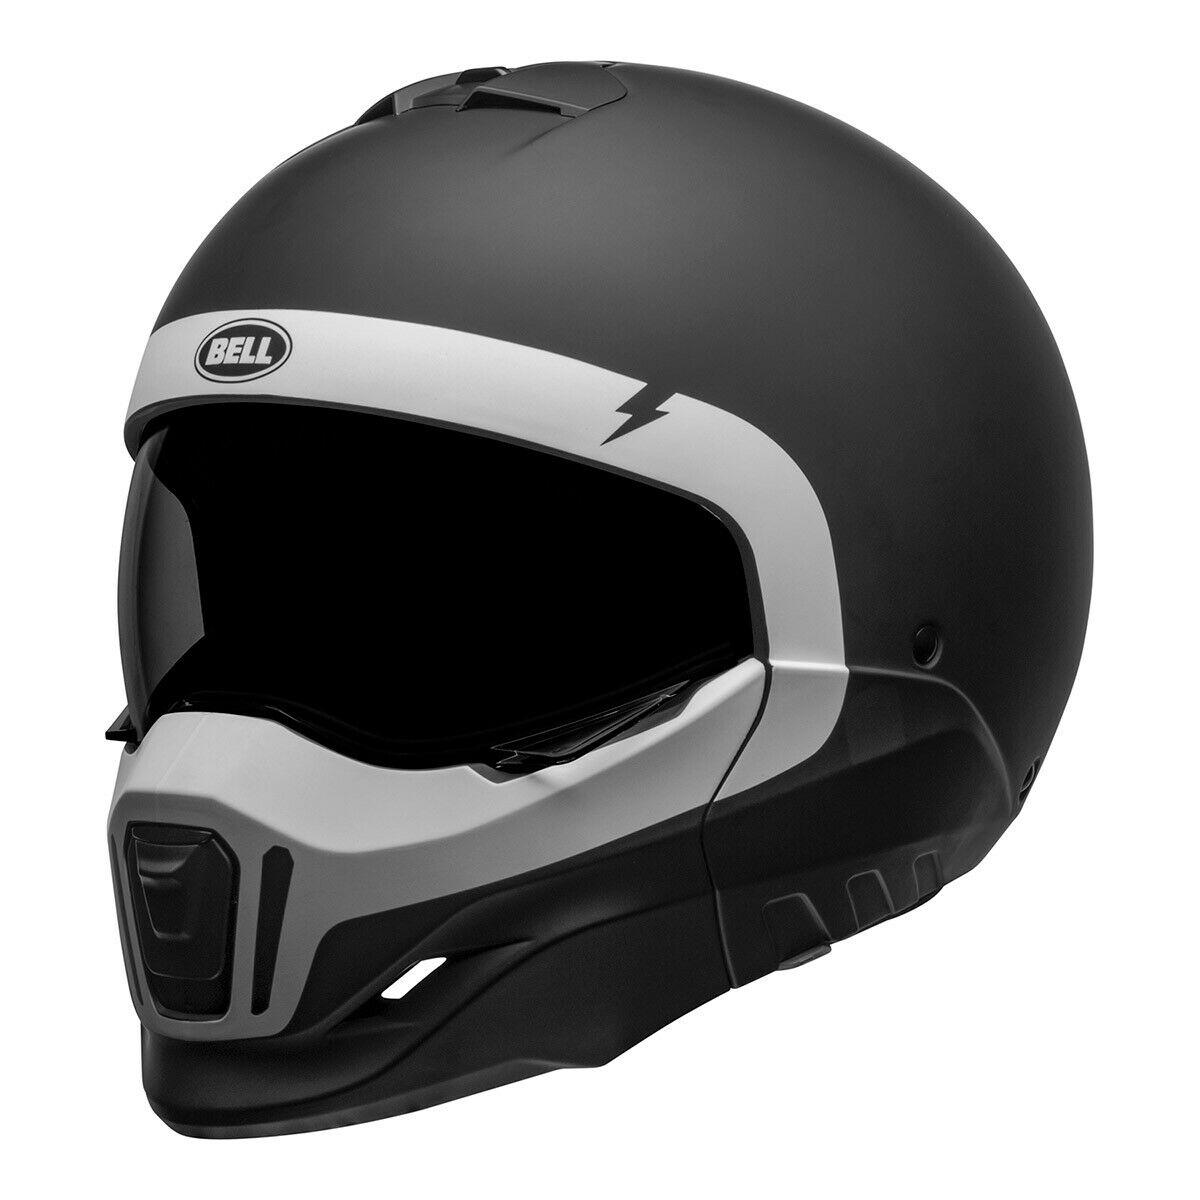 Bell Broozer Cranium Motorcycle Helmet -Matte  Black/White